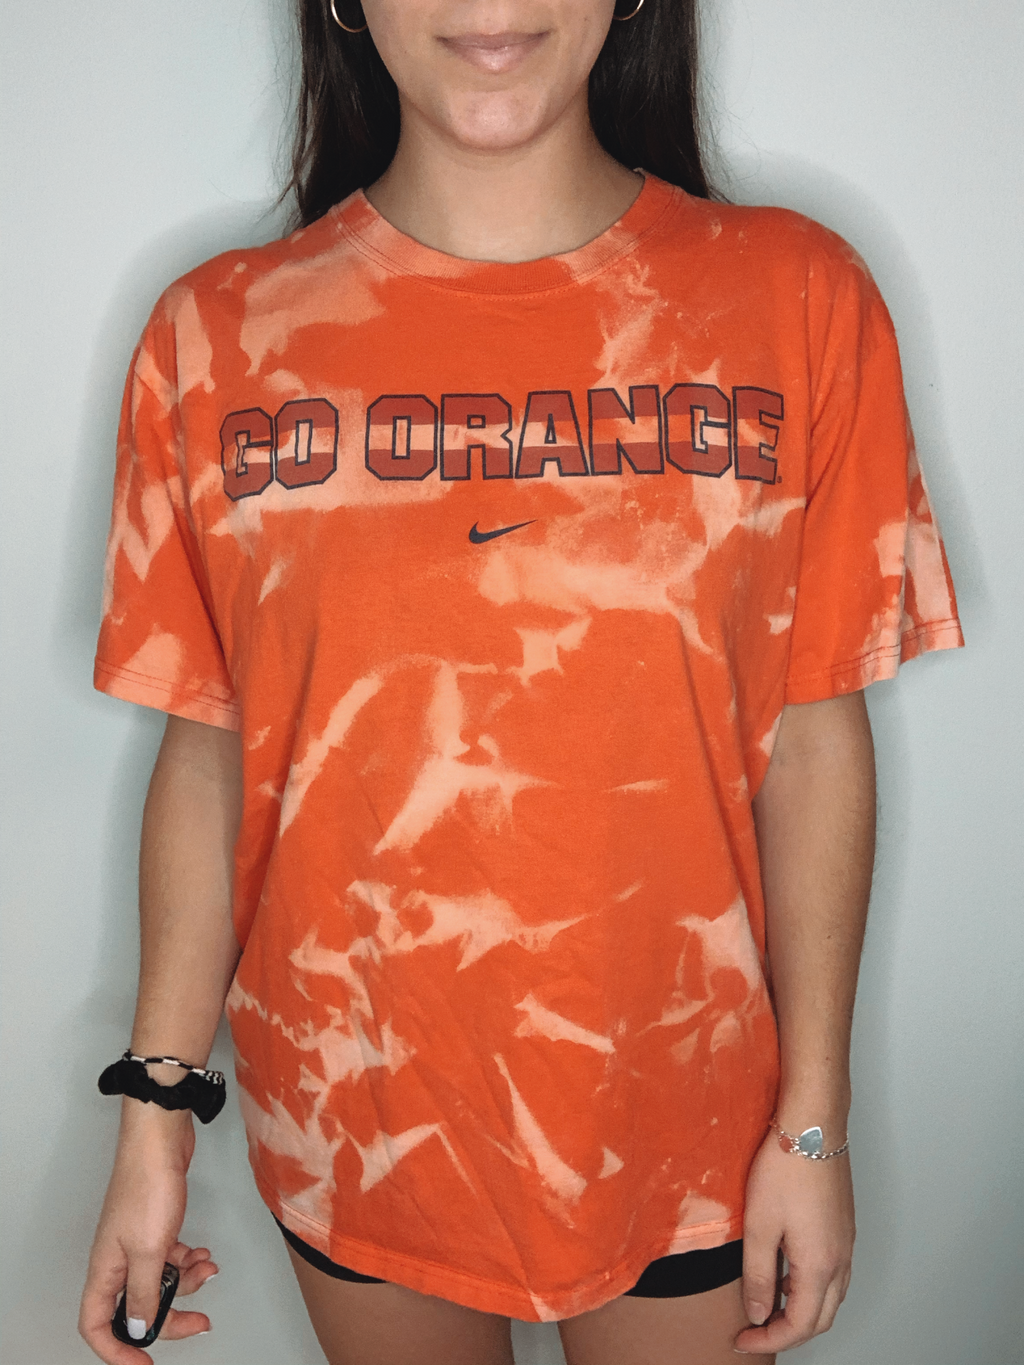 Syracuse University Bleached Shirt